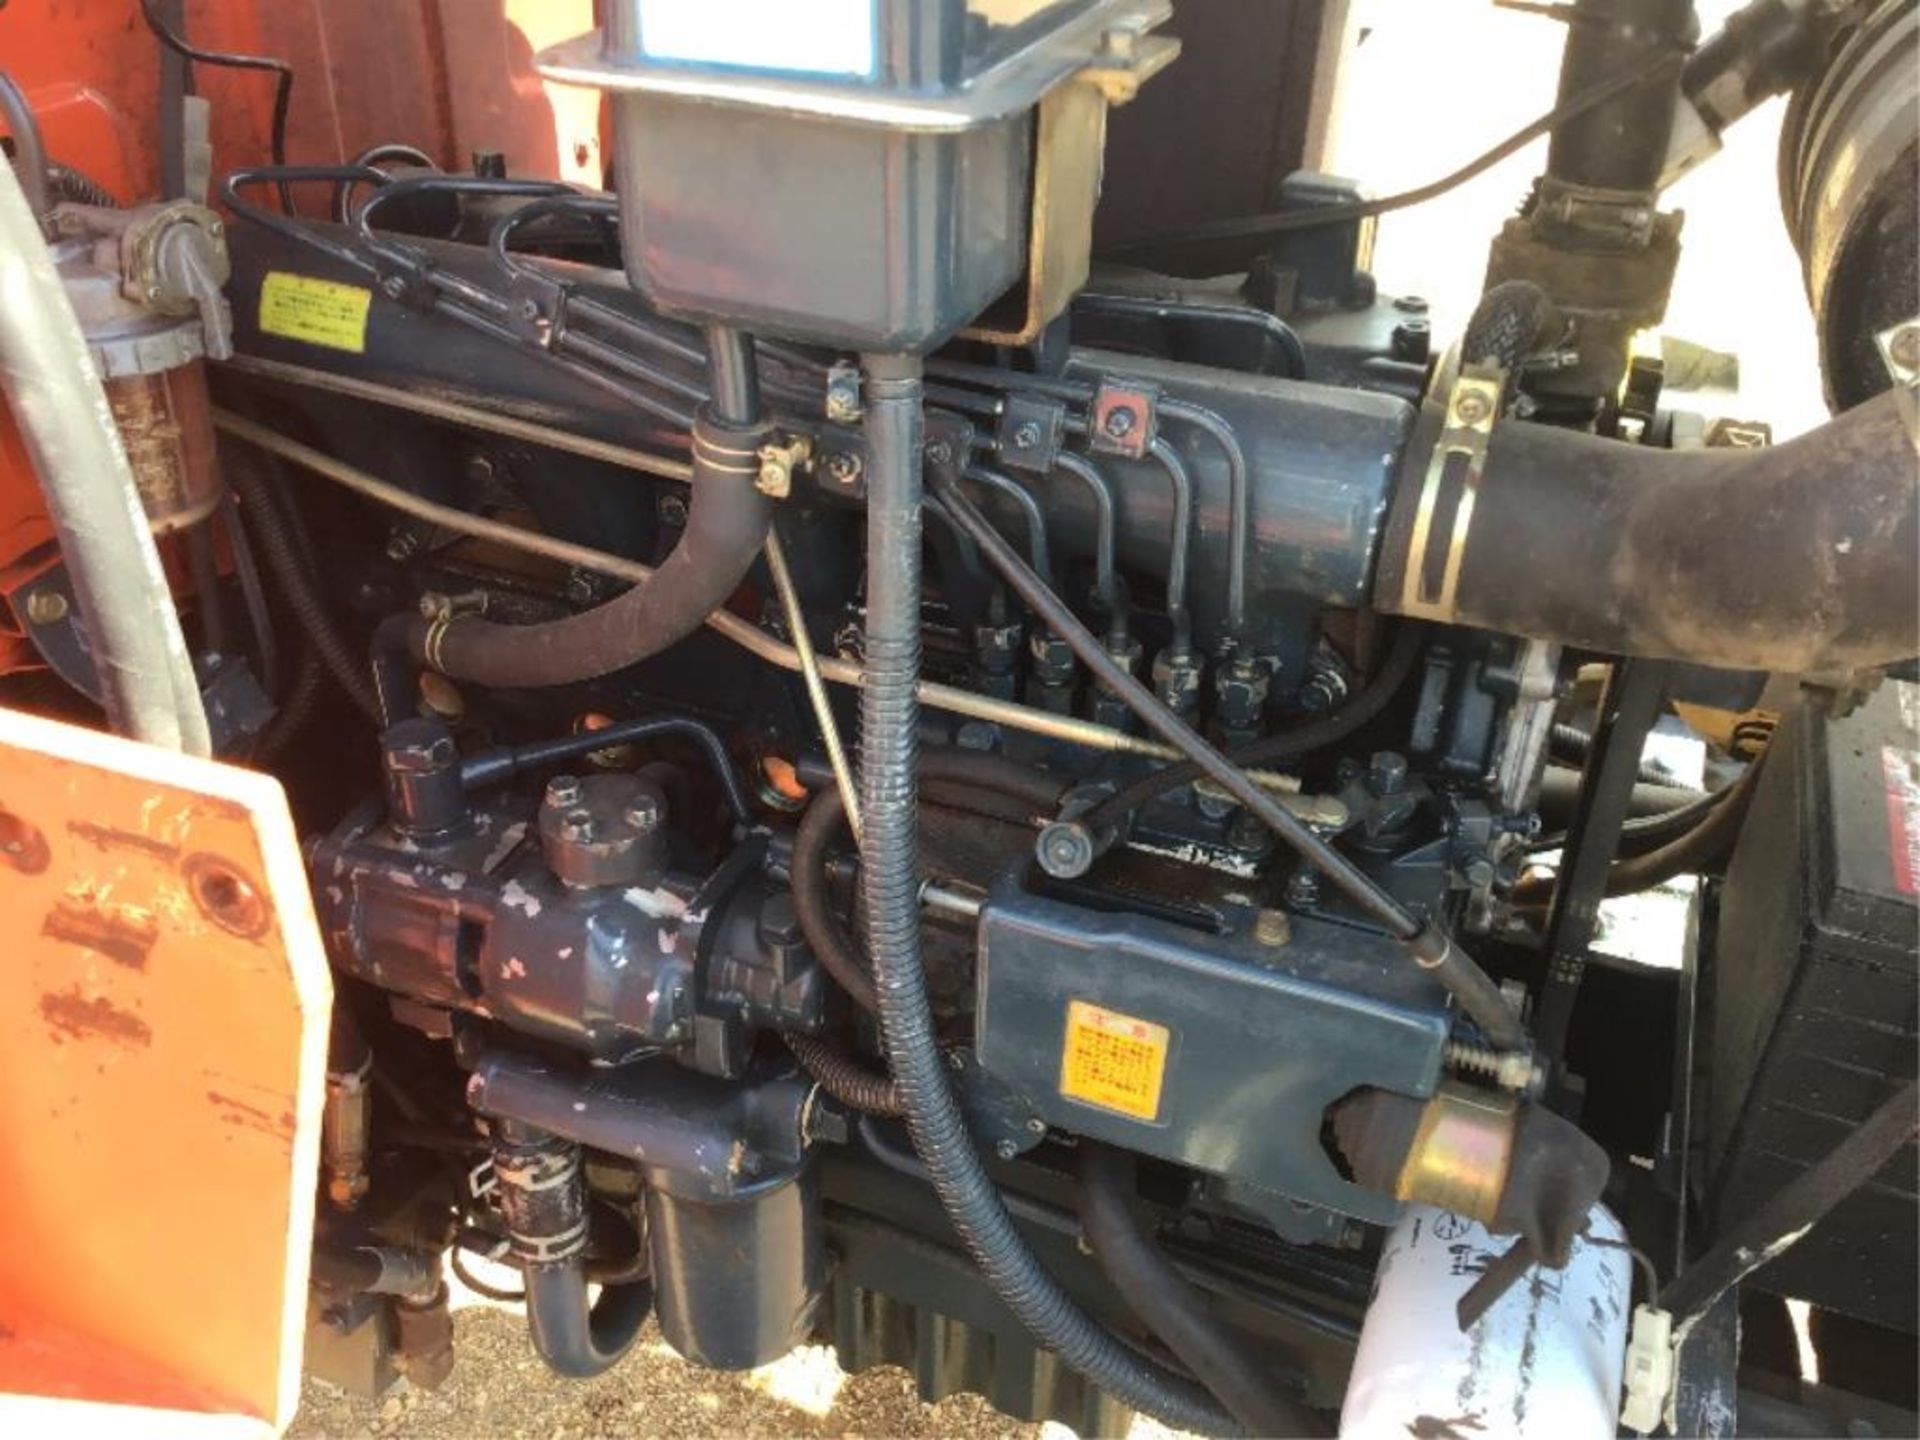 L1-455 Sunshine Kubota MFWD Tractor 5cyl 55hp Diesel Eng, 3pt, 540 4-Range PTO, Shuttle Shift, - Image 17 of 19